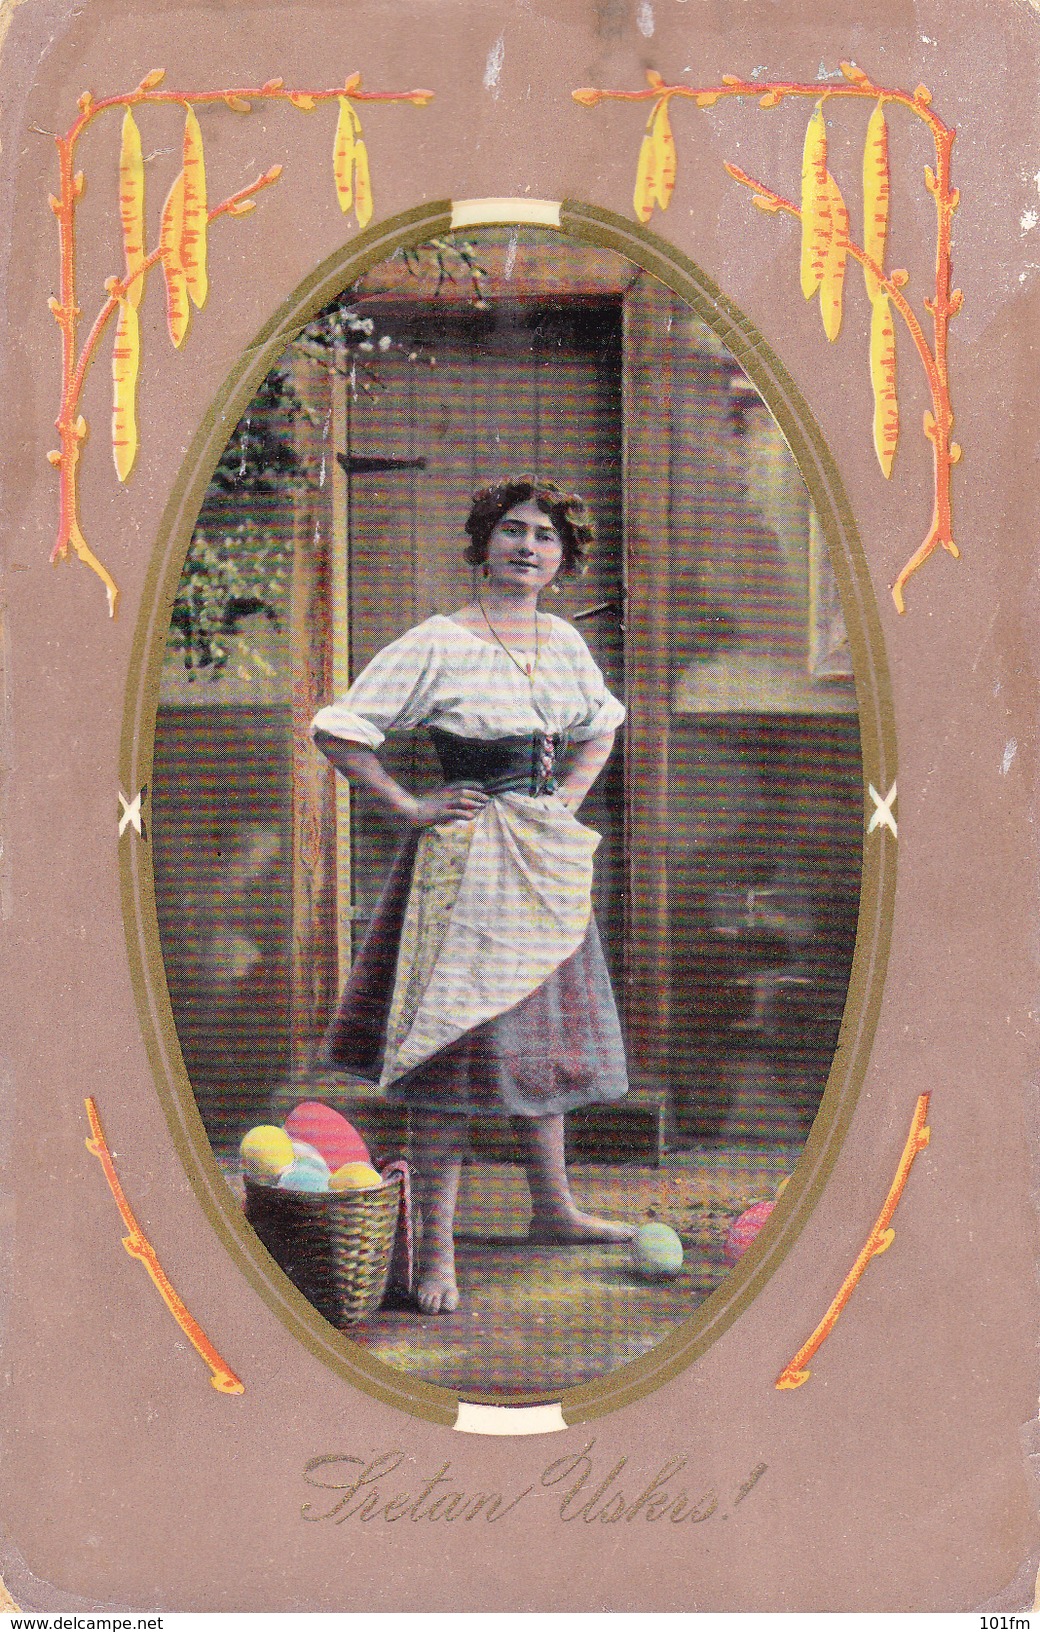 Sretan Uskrs, Easter Greetings - Frohliche Ostern,1913 - Easter